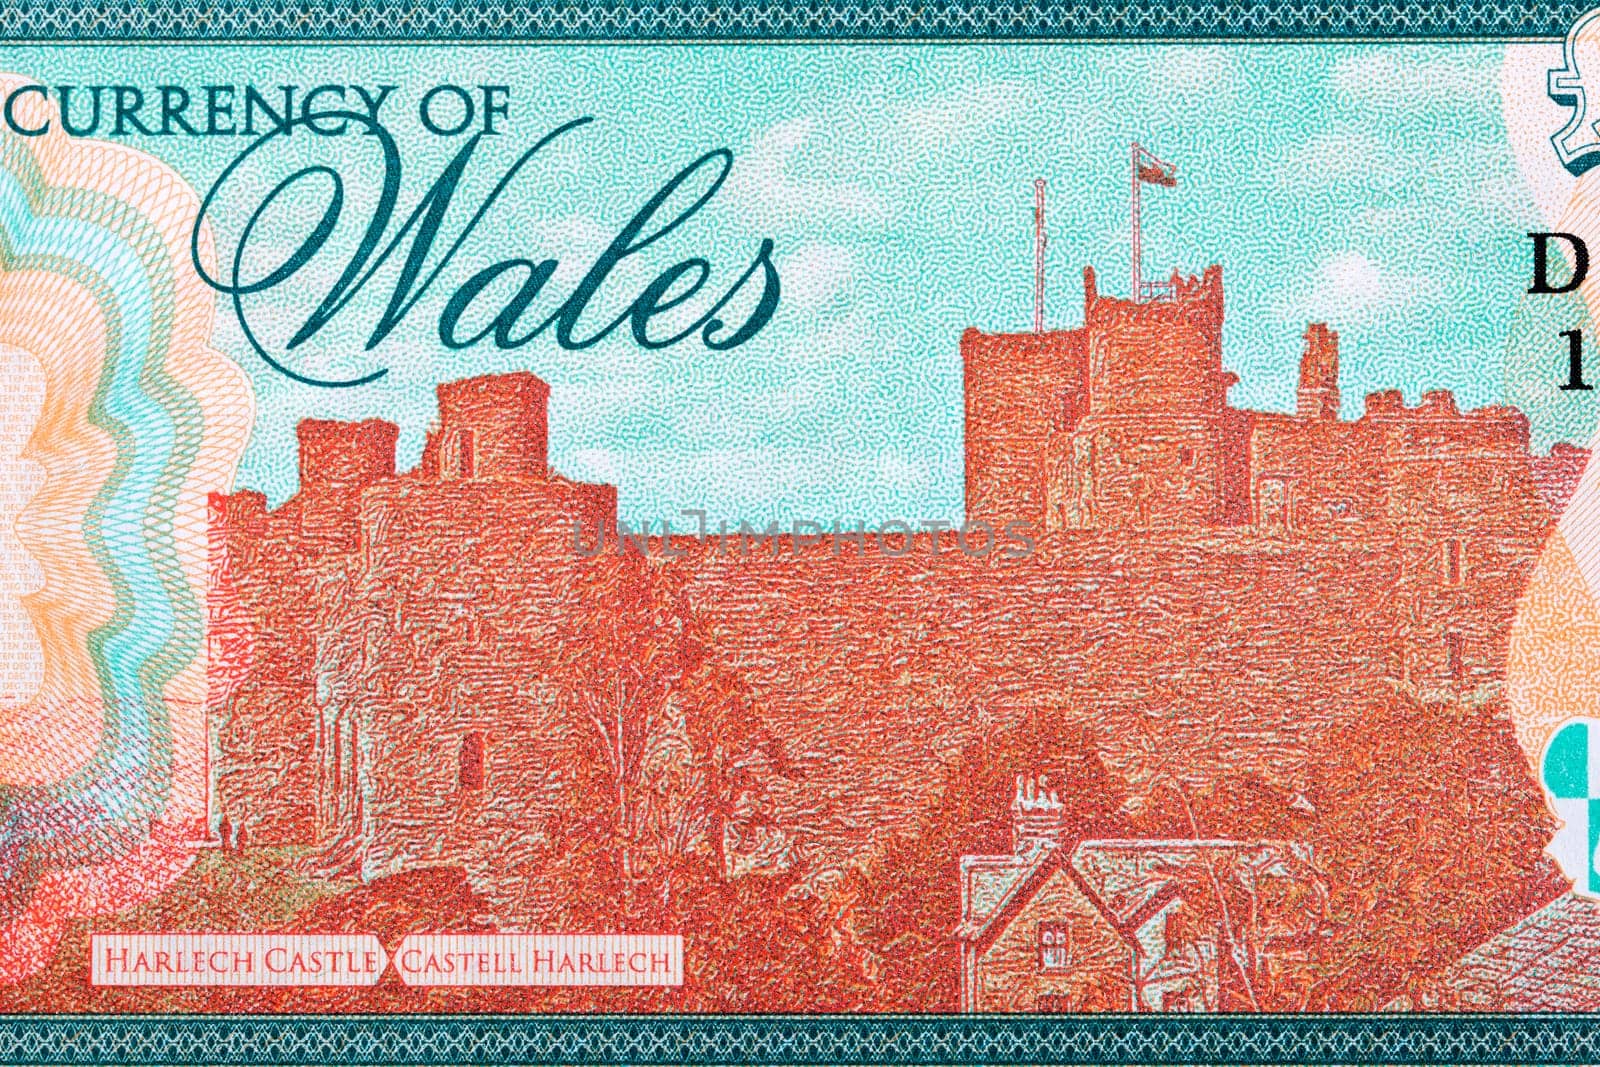 Harlech Castle from Welsh money by johan10